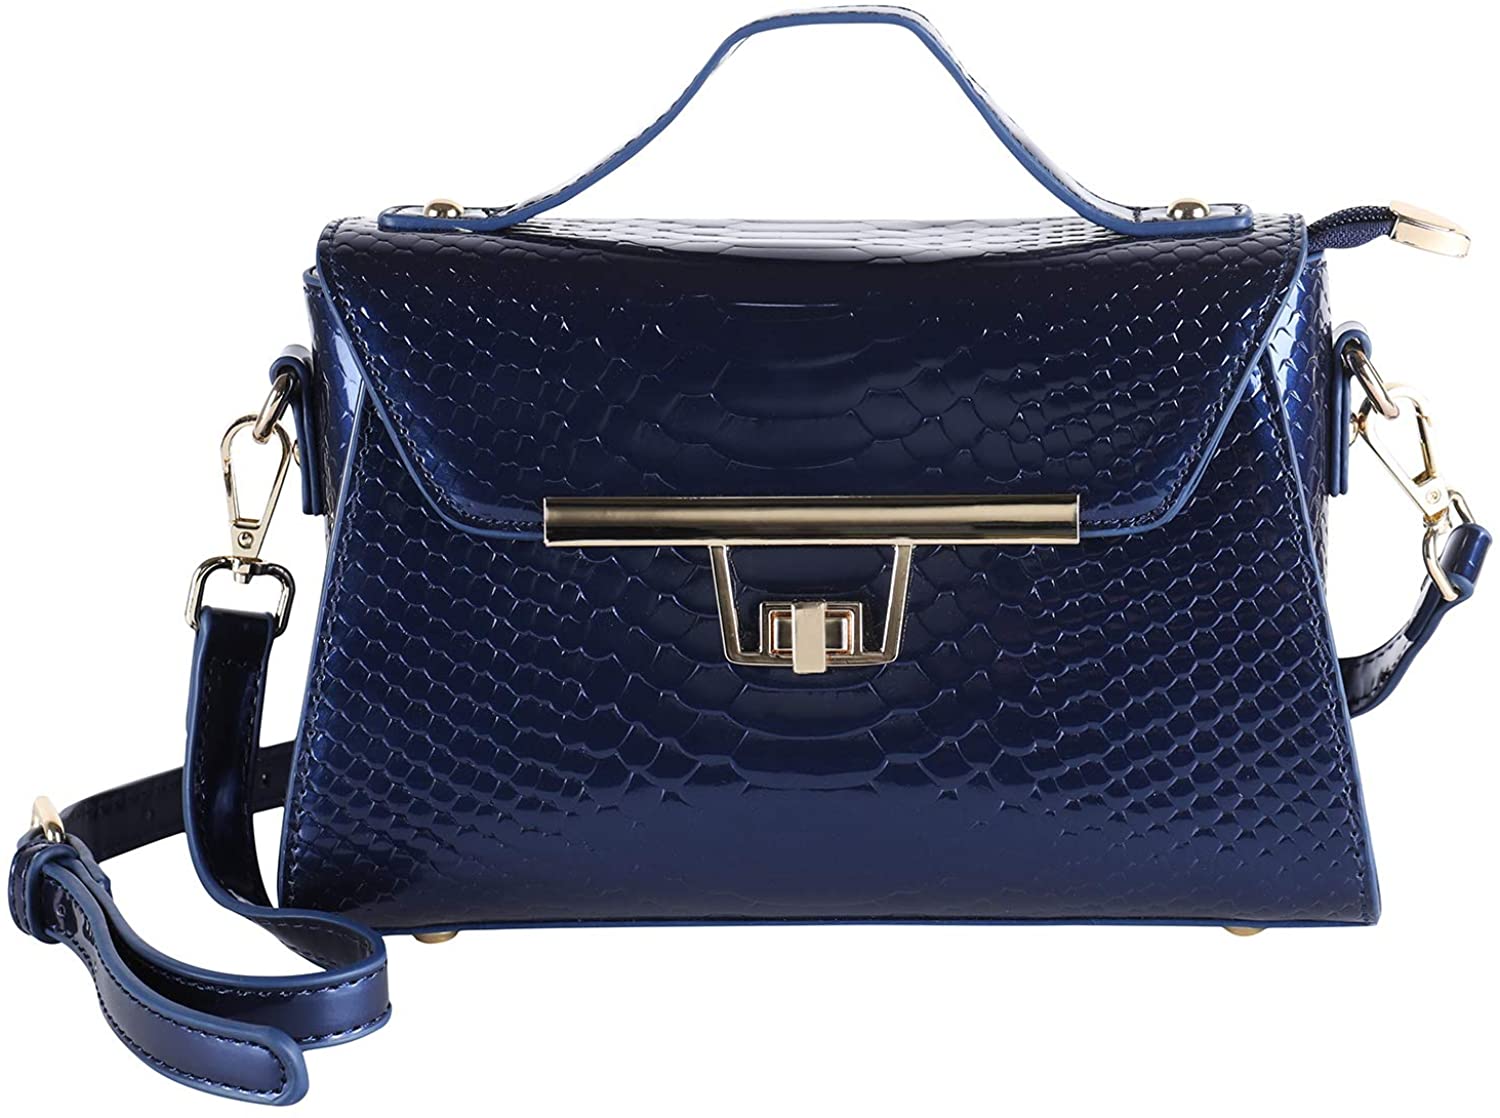 Price:$23.99    Mini Crossbody Bags for Women Fashion Tote Purses Handbags with Detachable Shoulder Strap Satchel (Royal blue)  Clothing